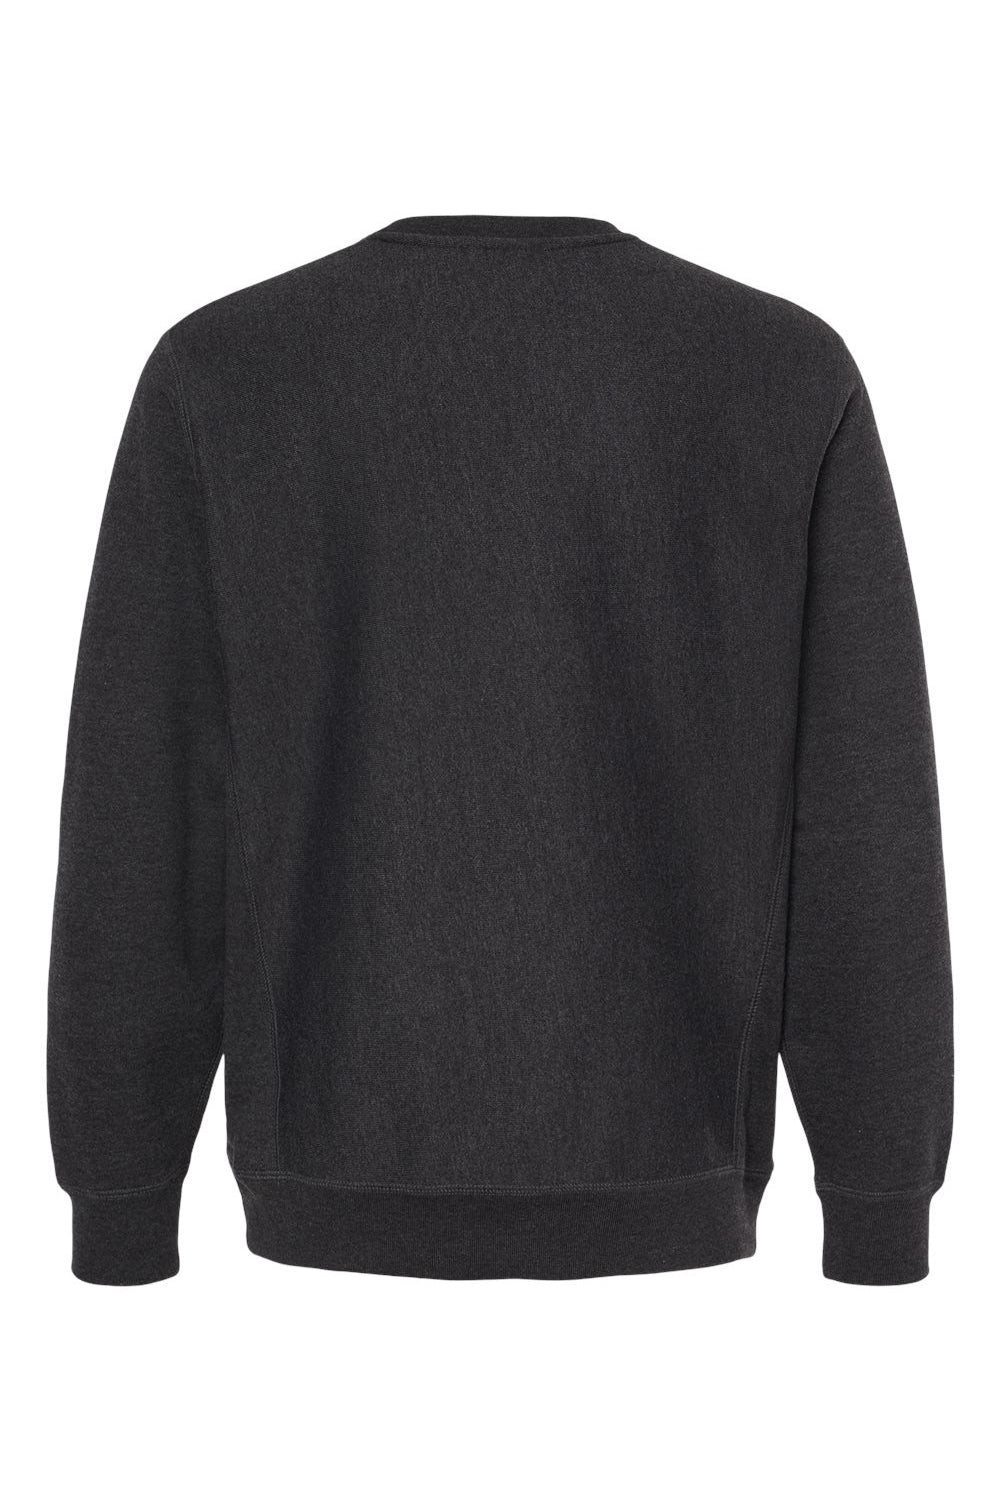 Independent Trading Co. IND5000C Mens Legend Crewneck Sweatshirt Heather Charcoal Grey Flat Back